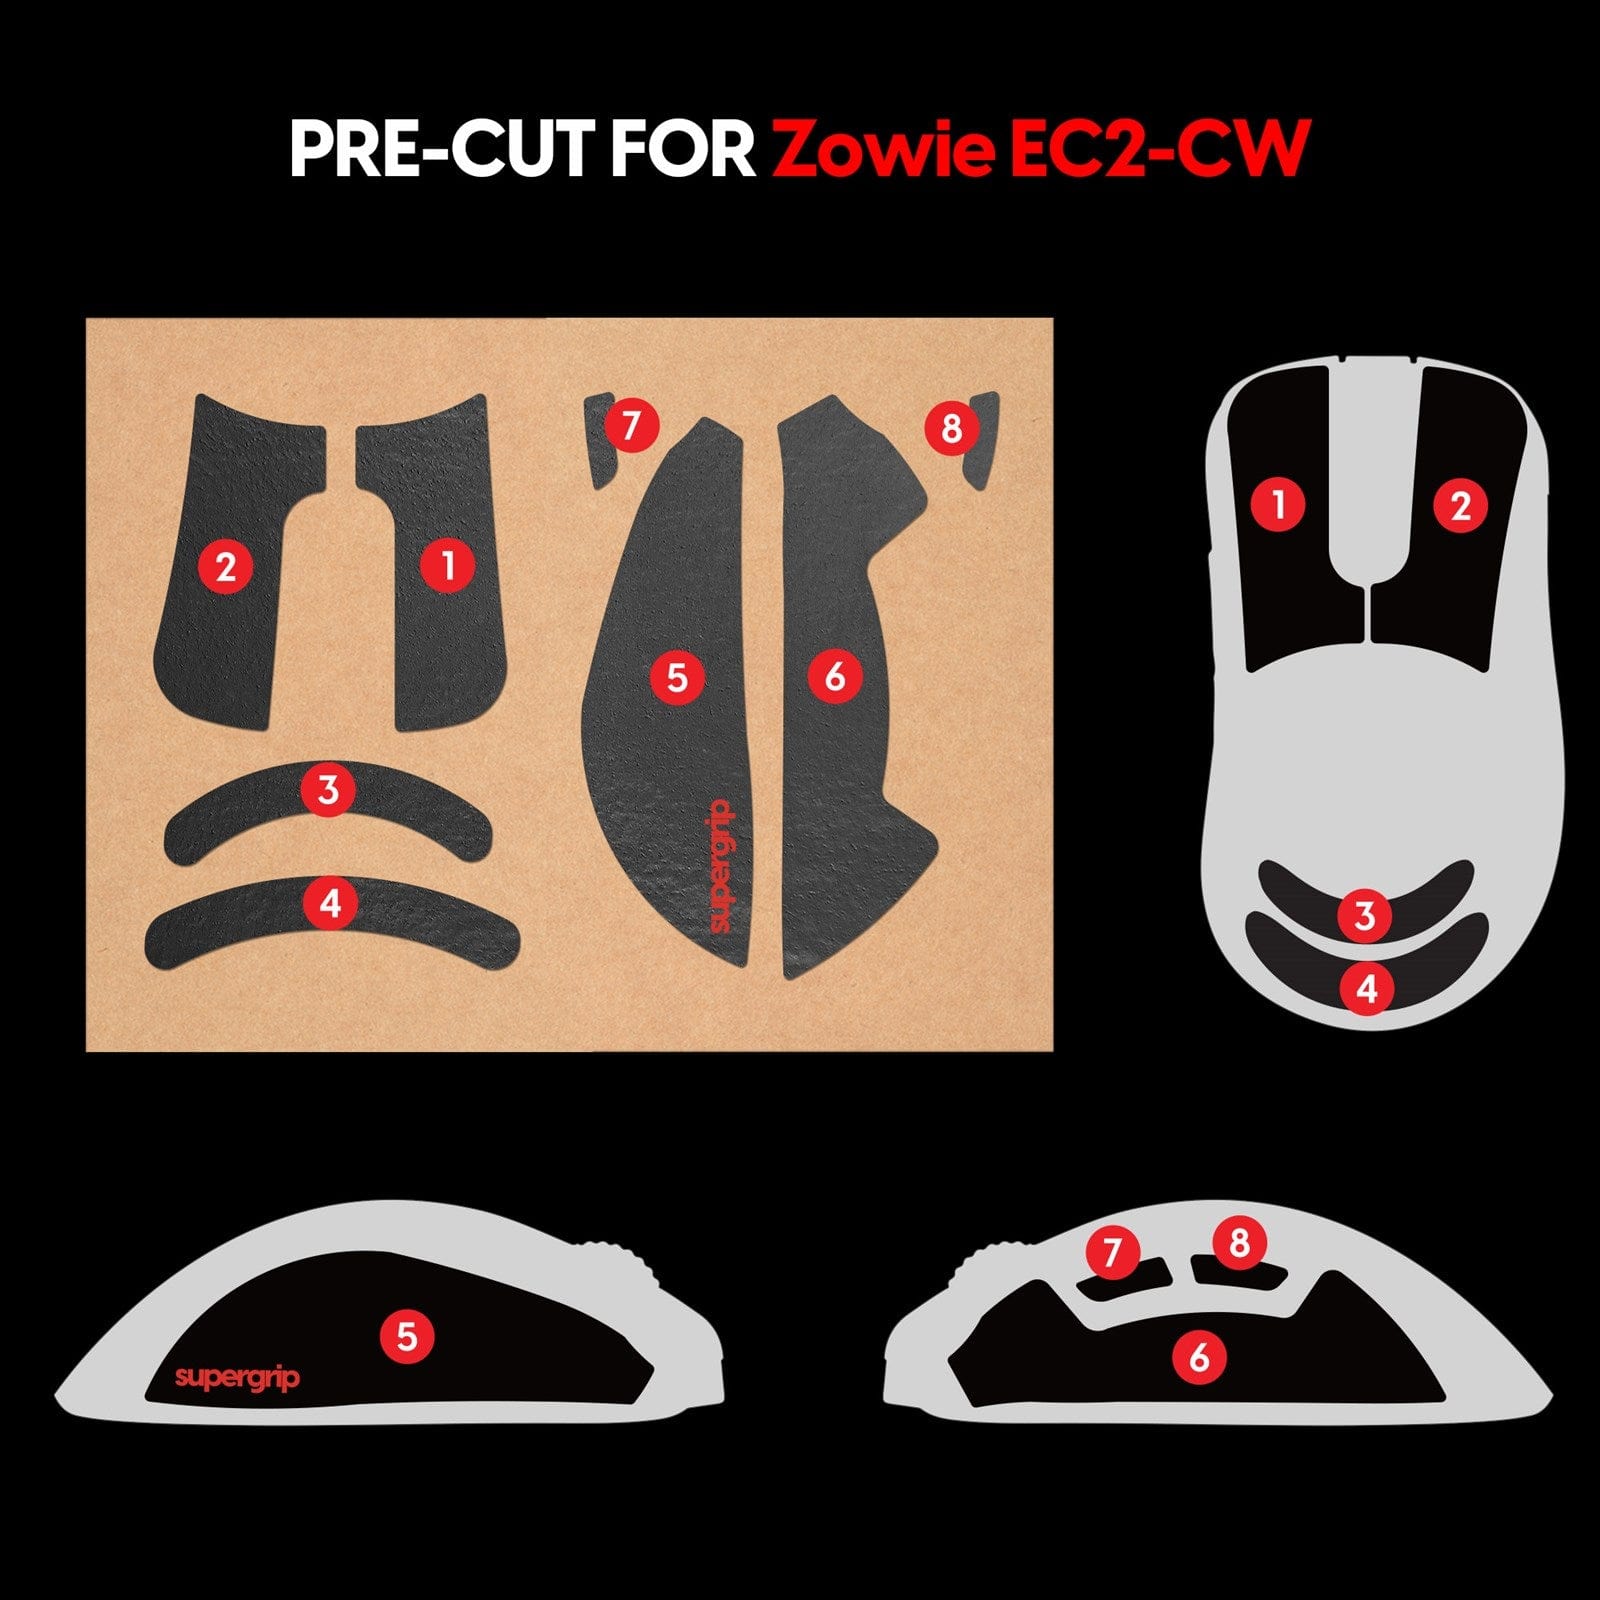 Miếng dán chống trượt Pulsar Supergrip - Grip Tape Precut for Zowie EC2-CW